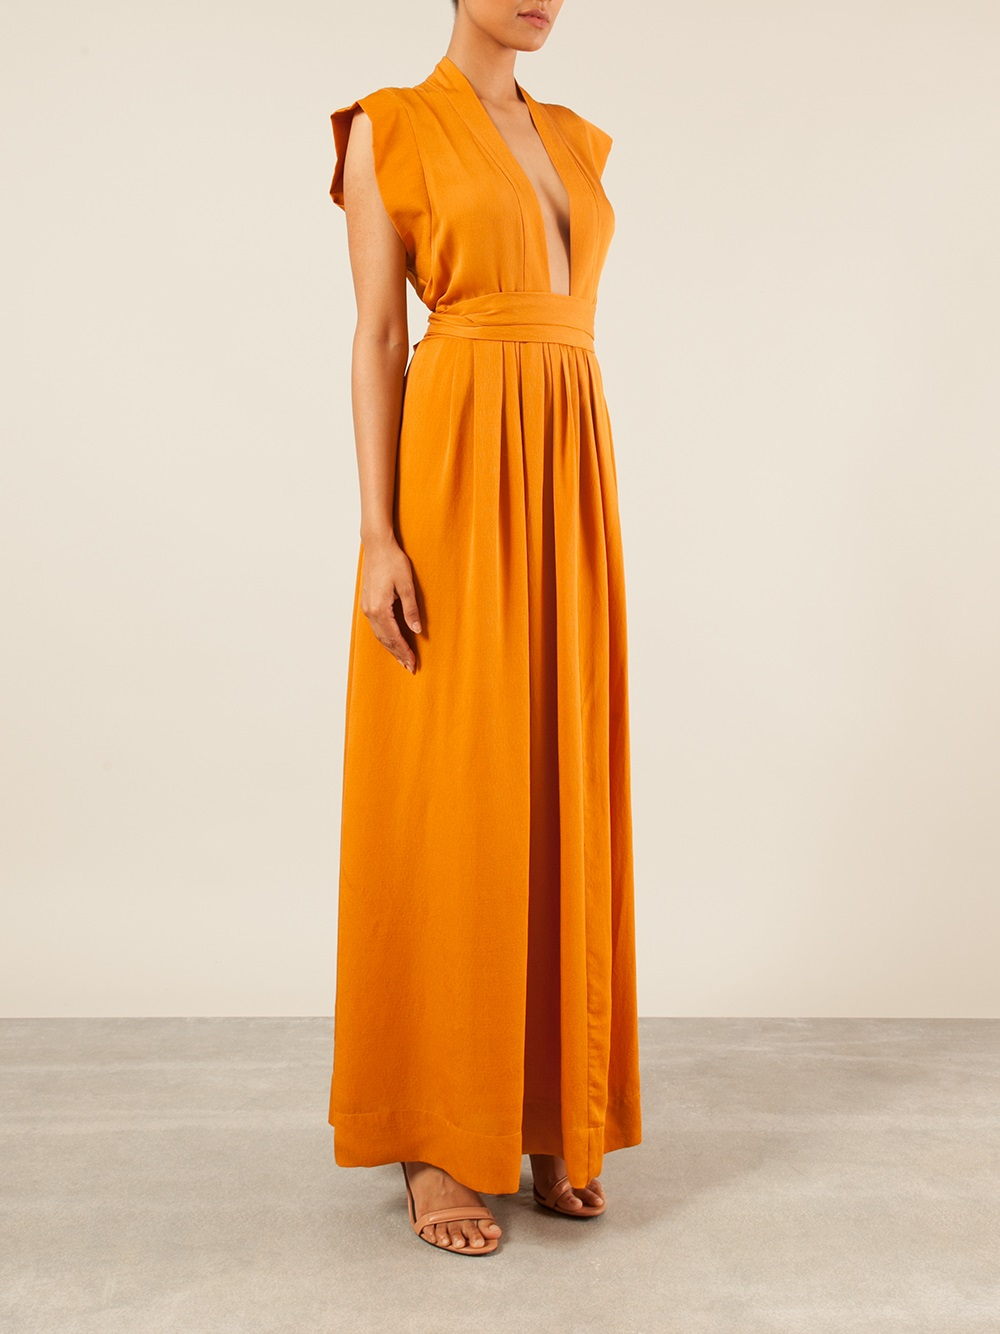 Isabel Marant 'Zack' Dress in Orange - Lyst